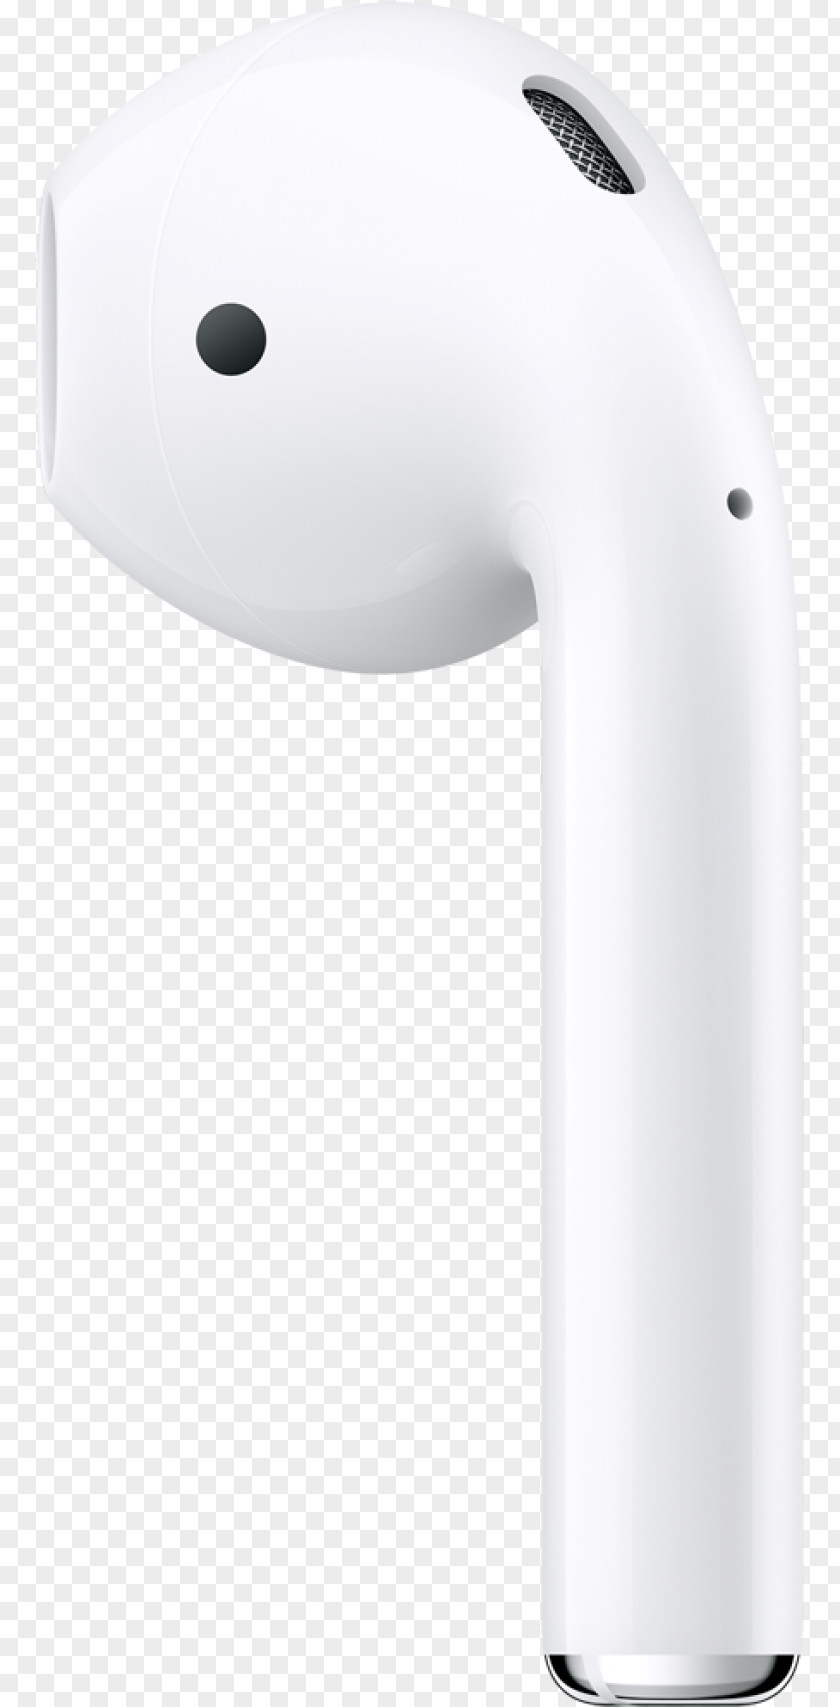 Apple AirPods Headphones IPhone 7 PNG